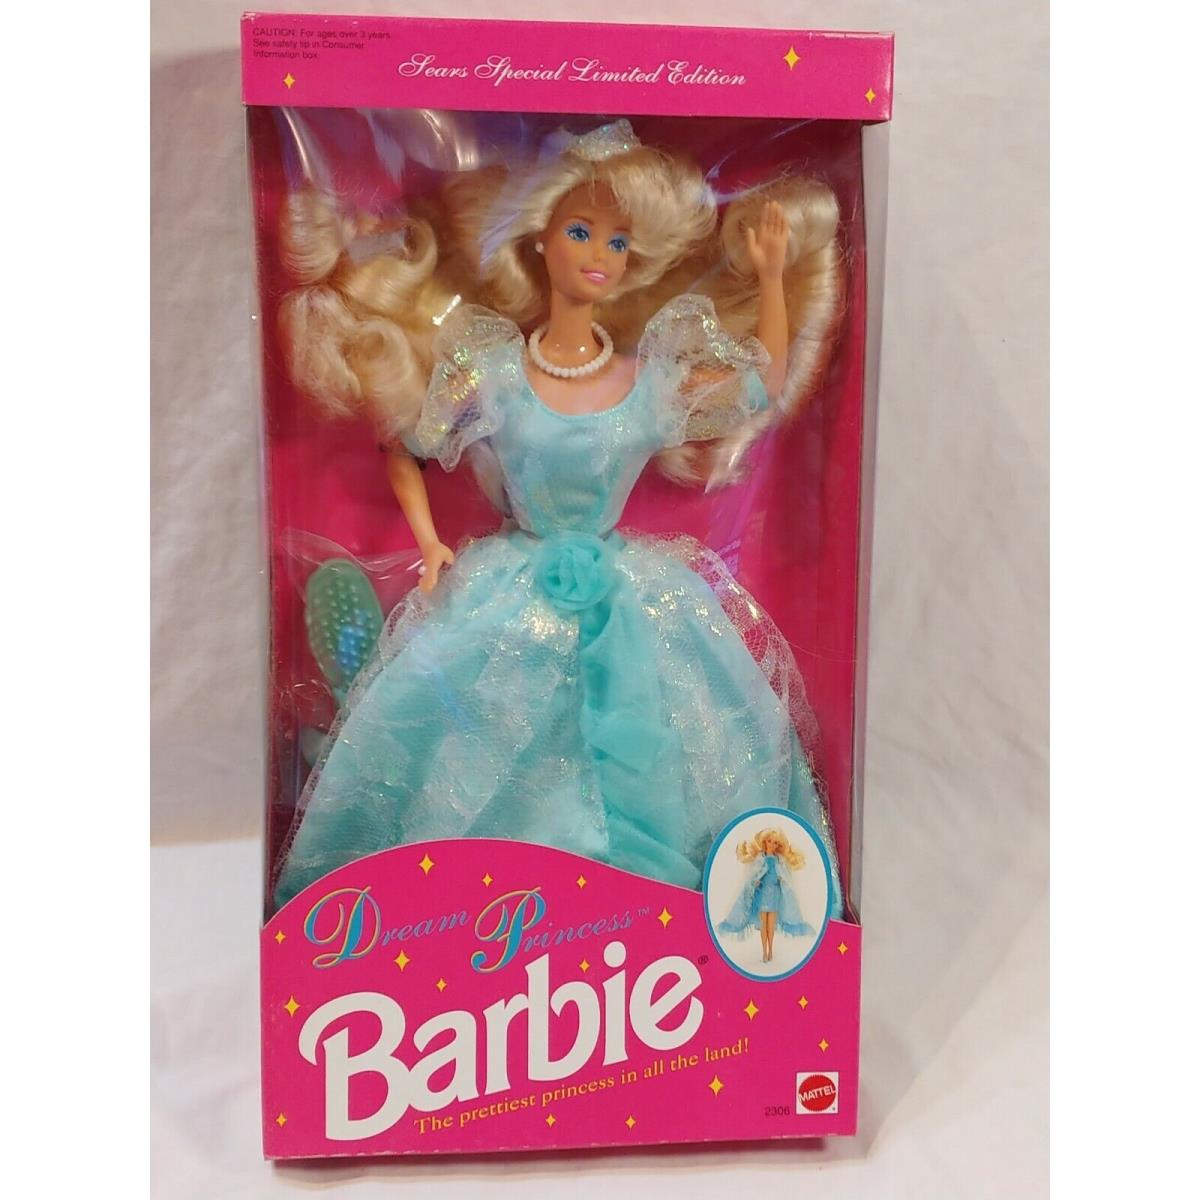 Vintage Mattel Dream Princess Barbie Sears Limited Edition 1992